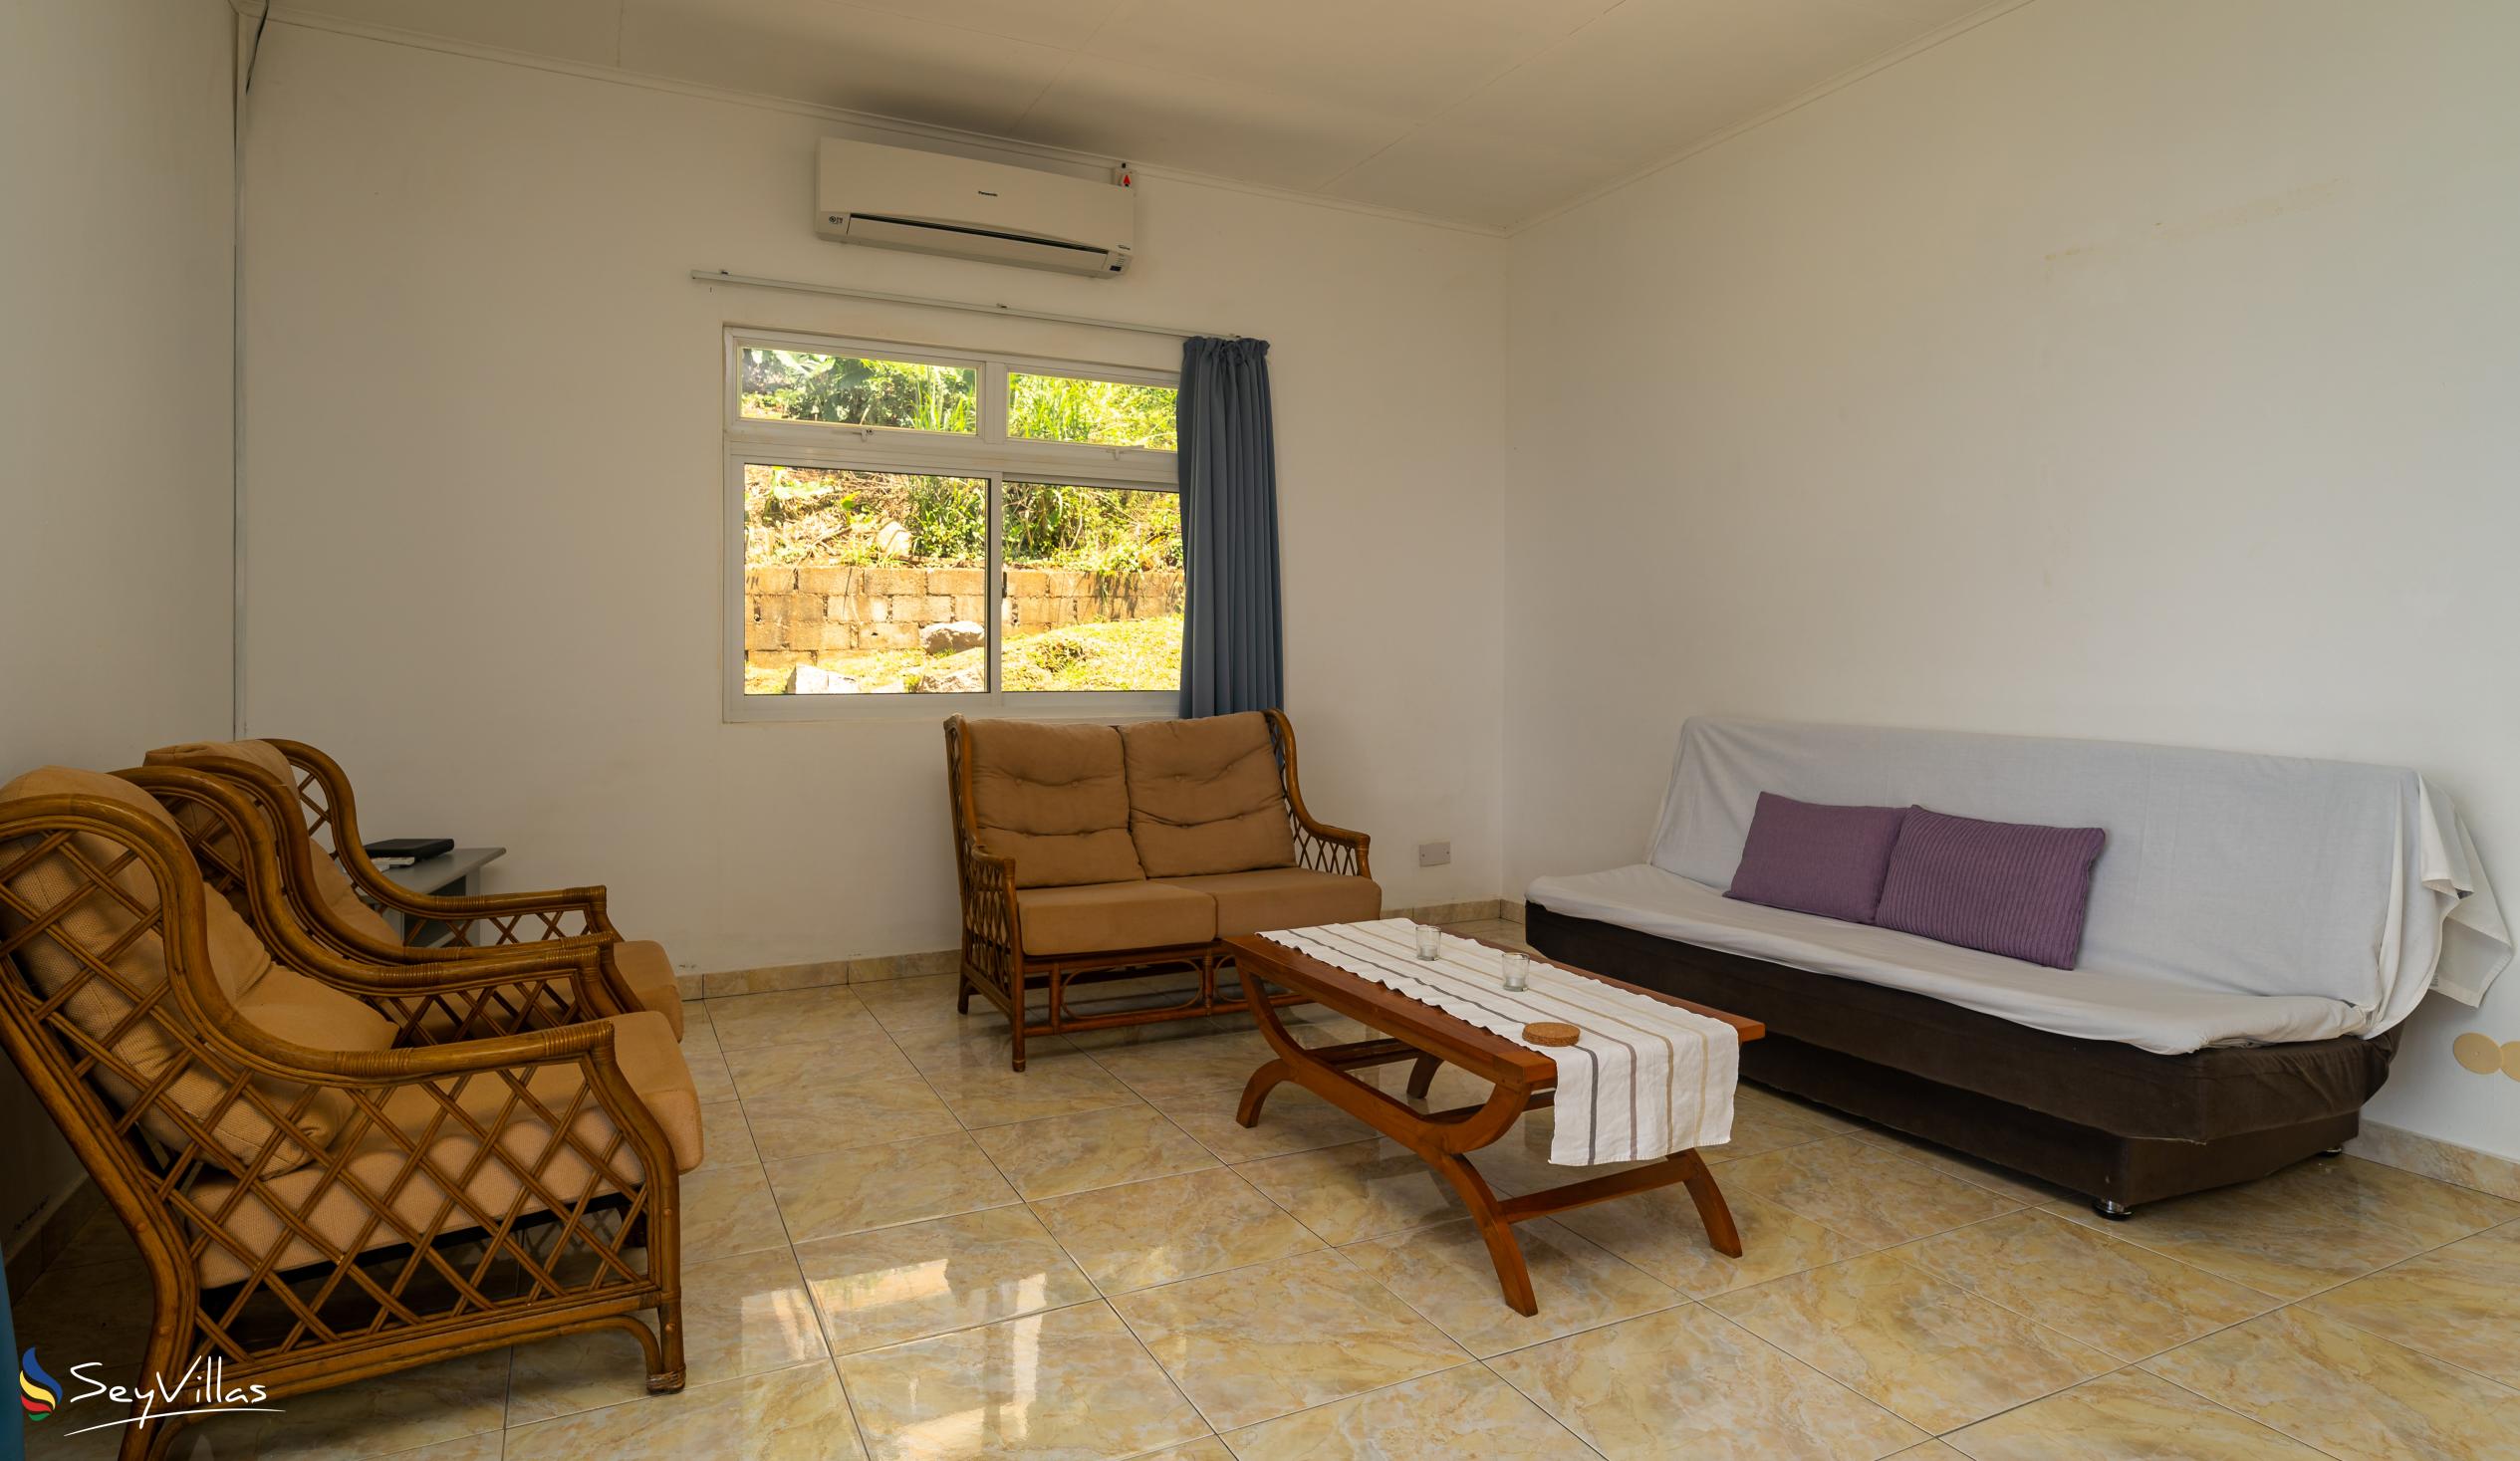 Foto 76: Maison Marikel - Villa 2 chambres - Mahé (Seychelles)